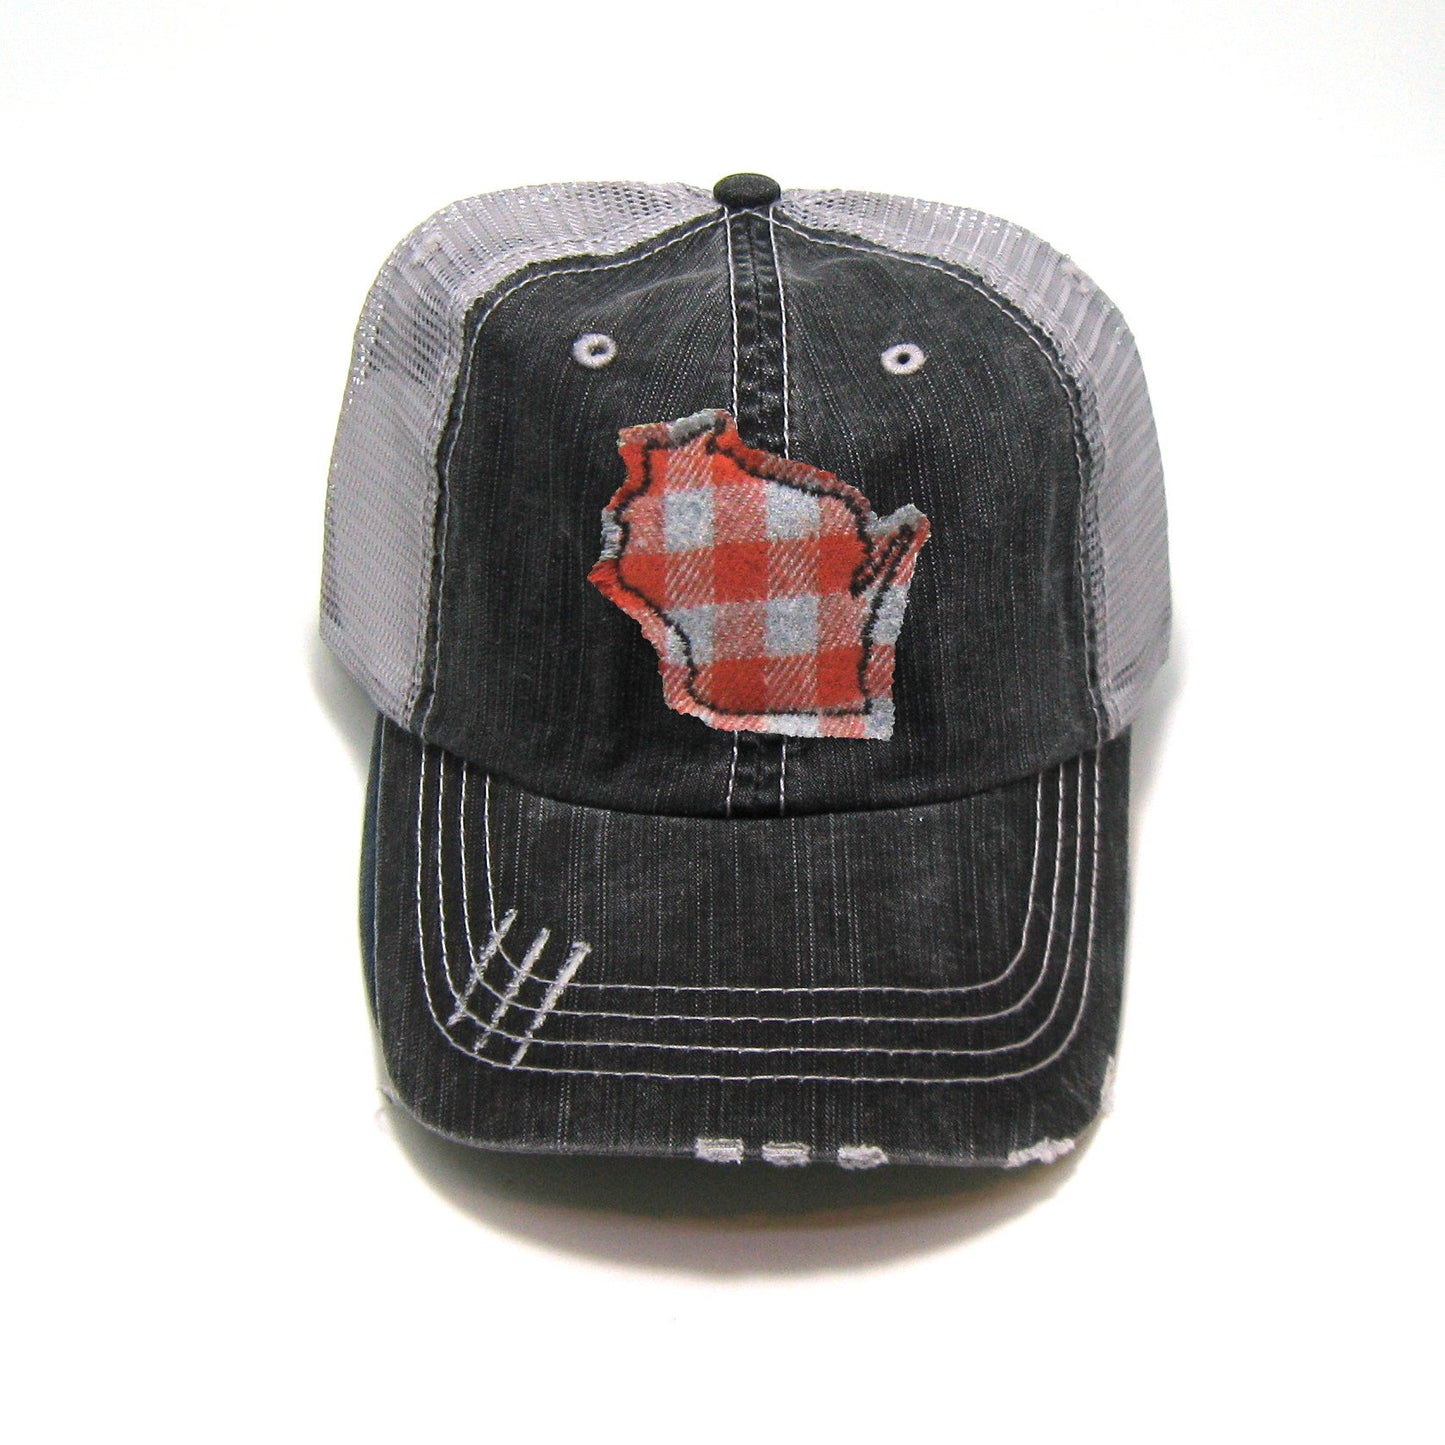 Gray Distressed Trucker Hat - Orange Buffalo Check - All US States